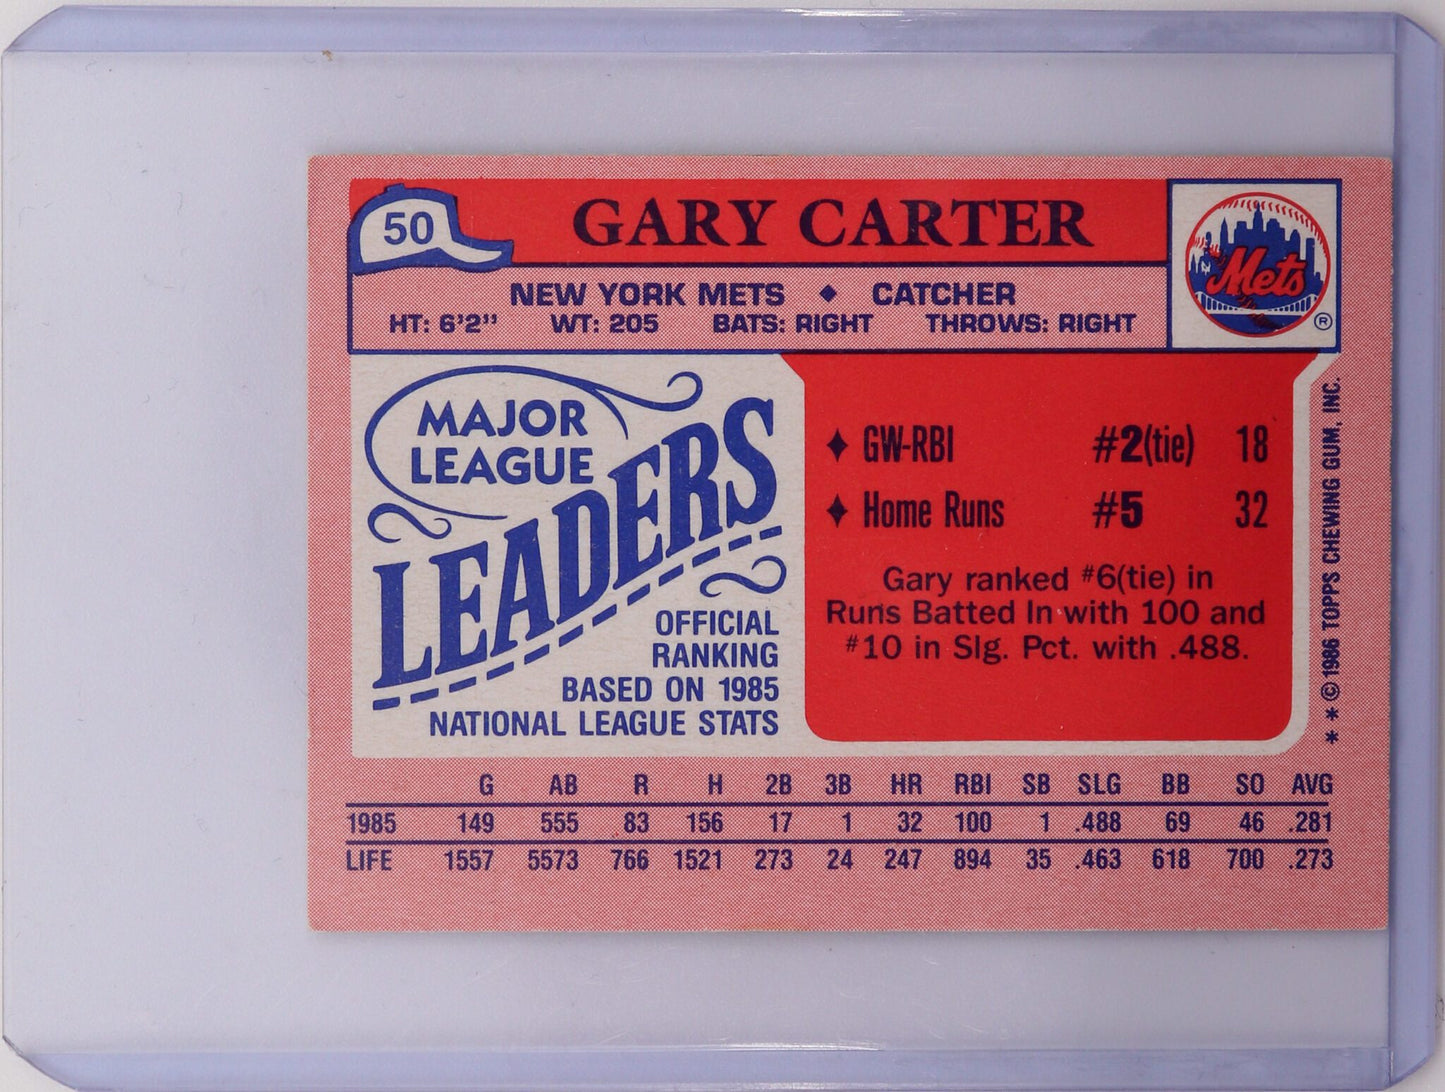 1986 Topps Mini Major League Leaders Gary Carter #50, Mint